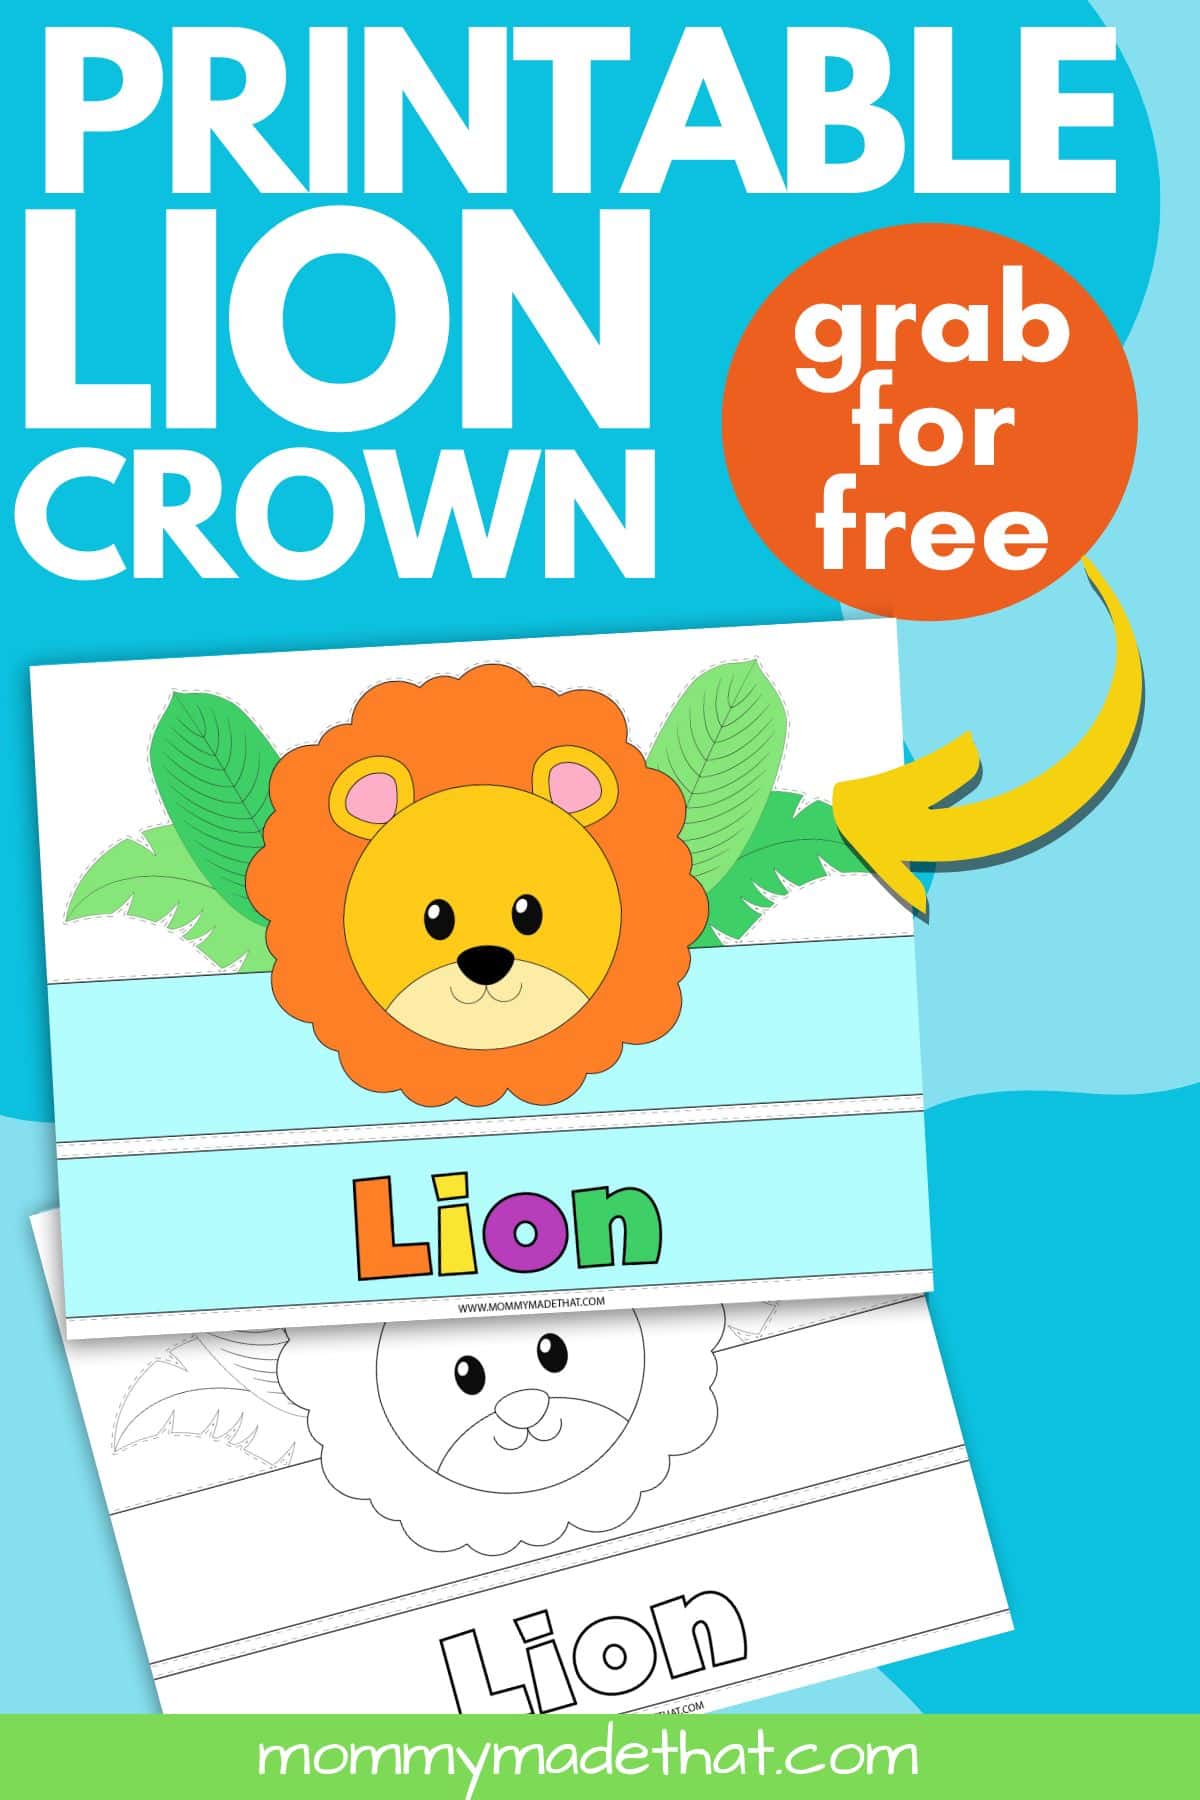 free printable lion crown for kids